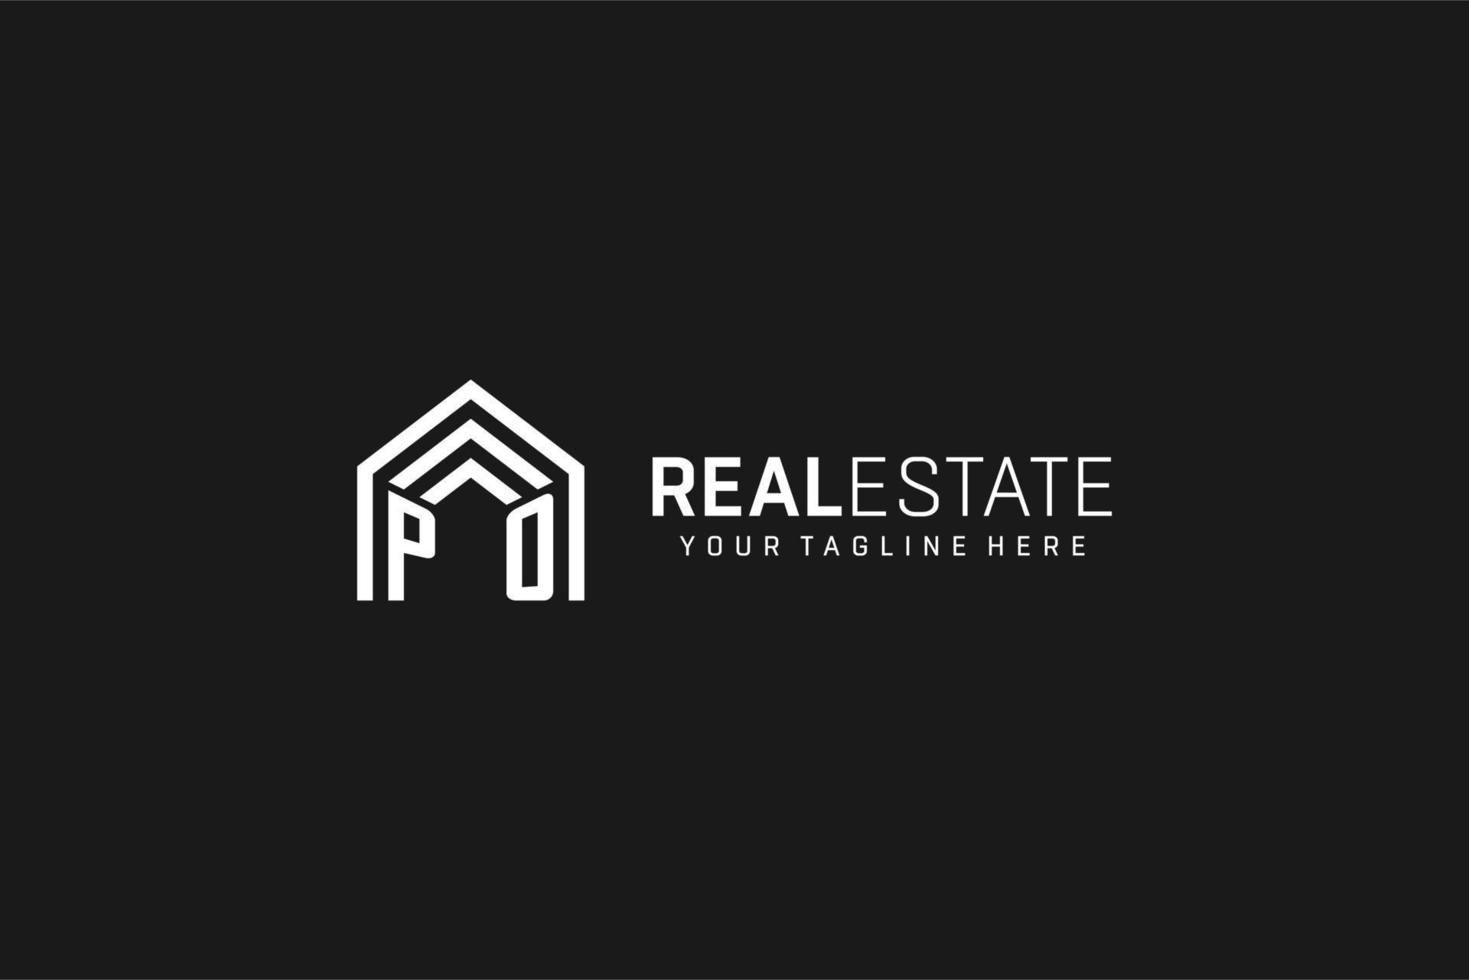 Letter PO house roof shape logo, creative real estate monogram logo style vector